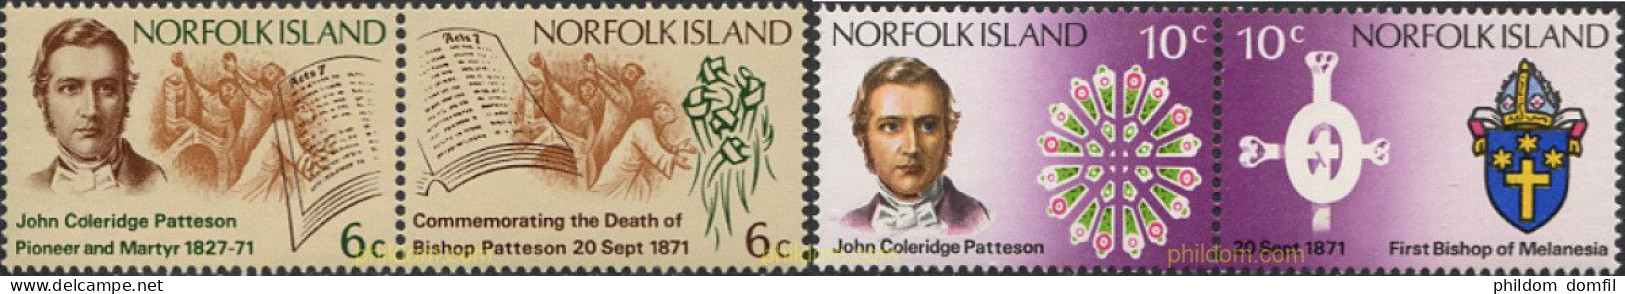 274268 MNH NORFOLK 1971 CENTENARIO DE LA MUERTE DE JOHN COLEREDGEPATTESON - Ile Norfolk